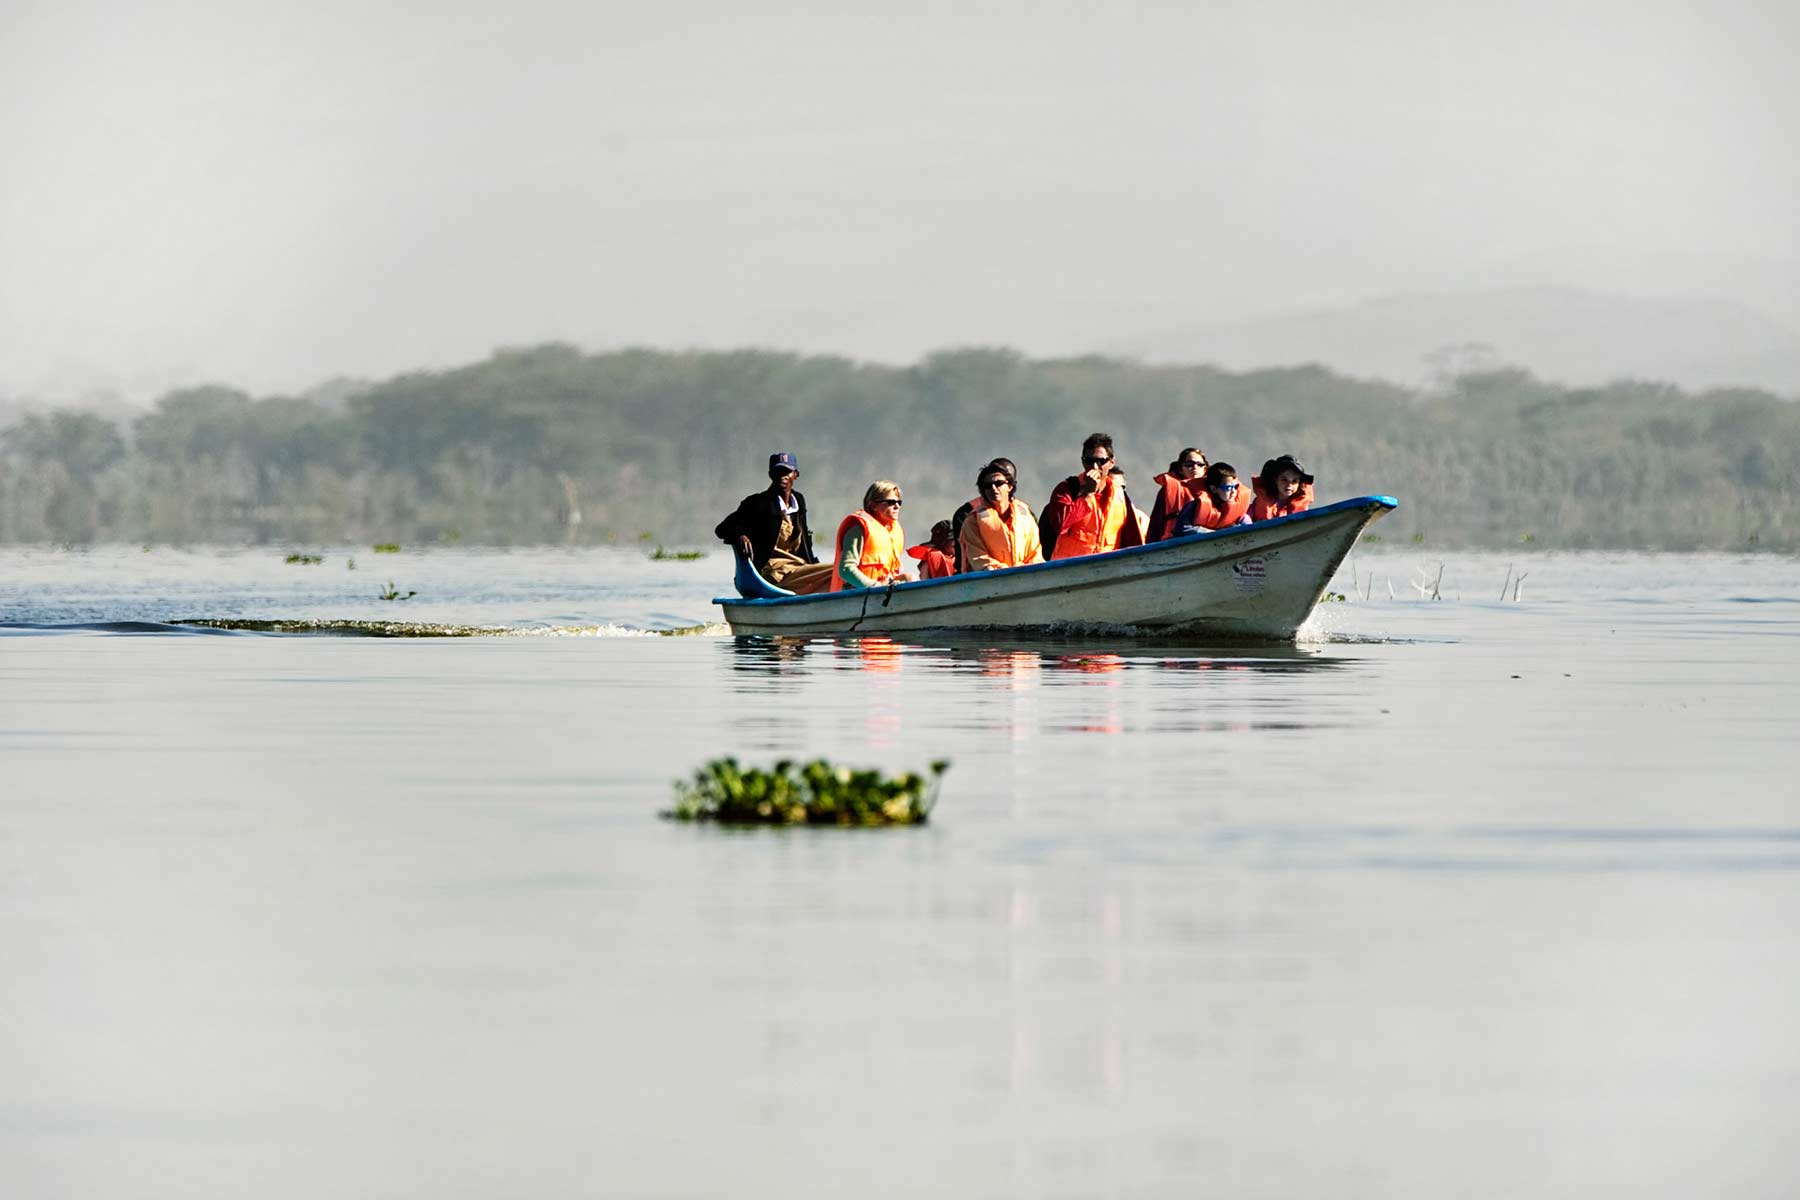 Lake Naivasha Boat Ride And Safari | Lake Naivasha, Kenya | Travel Tips